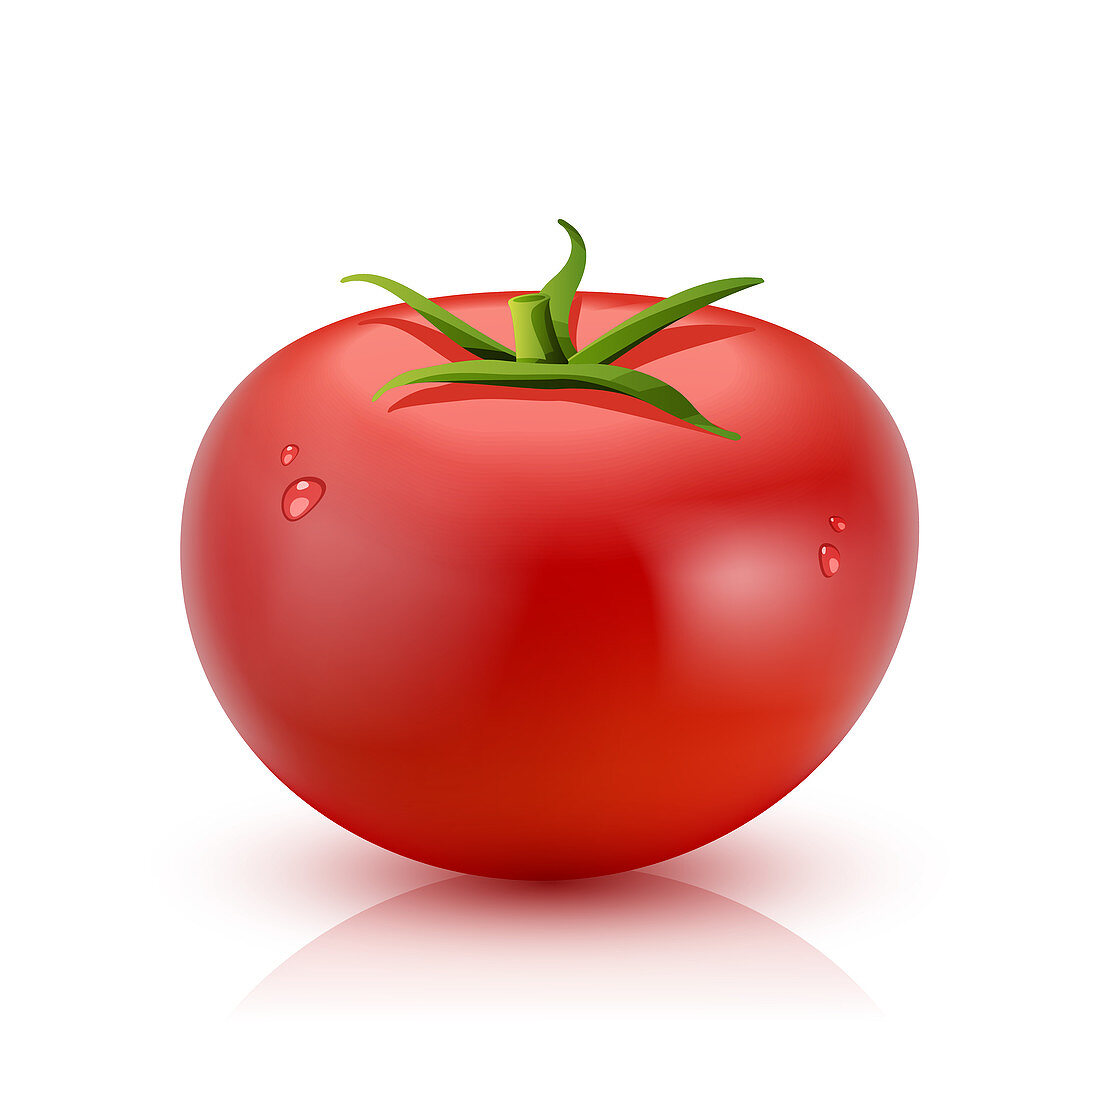 Tomato, illustration